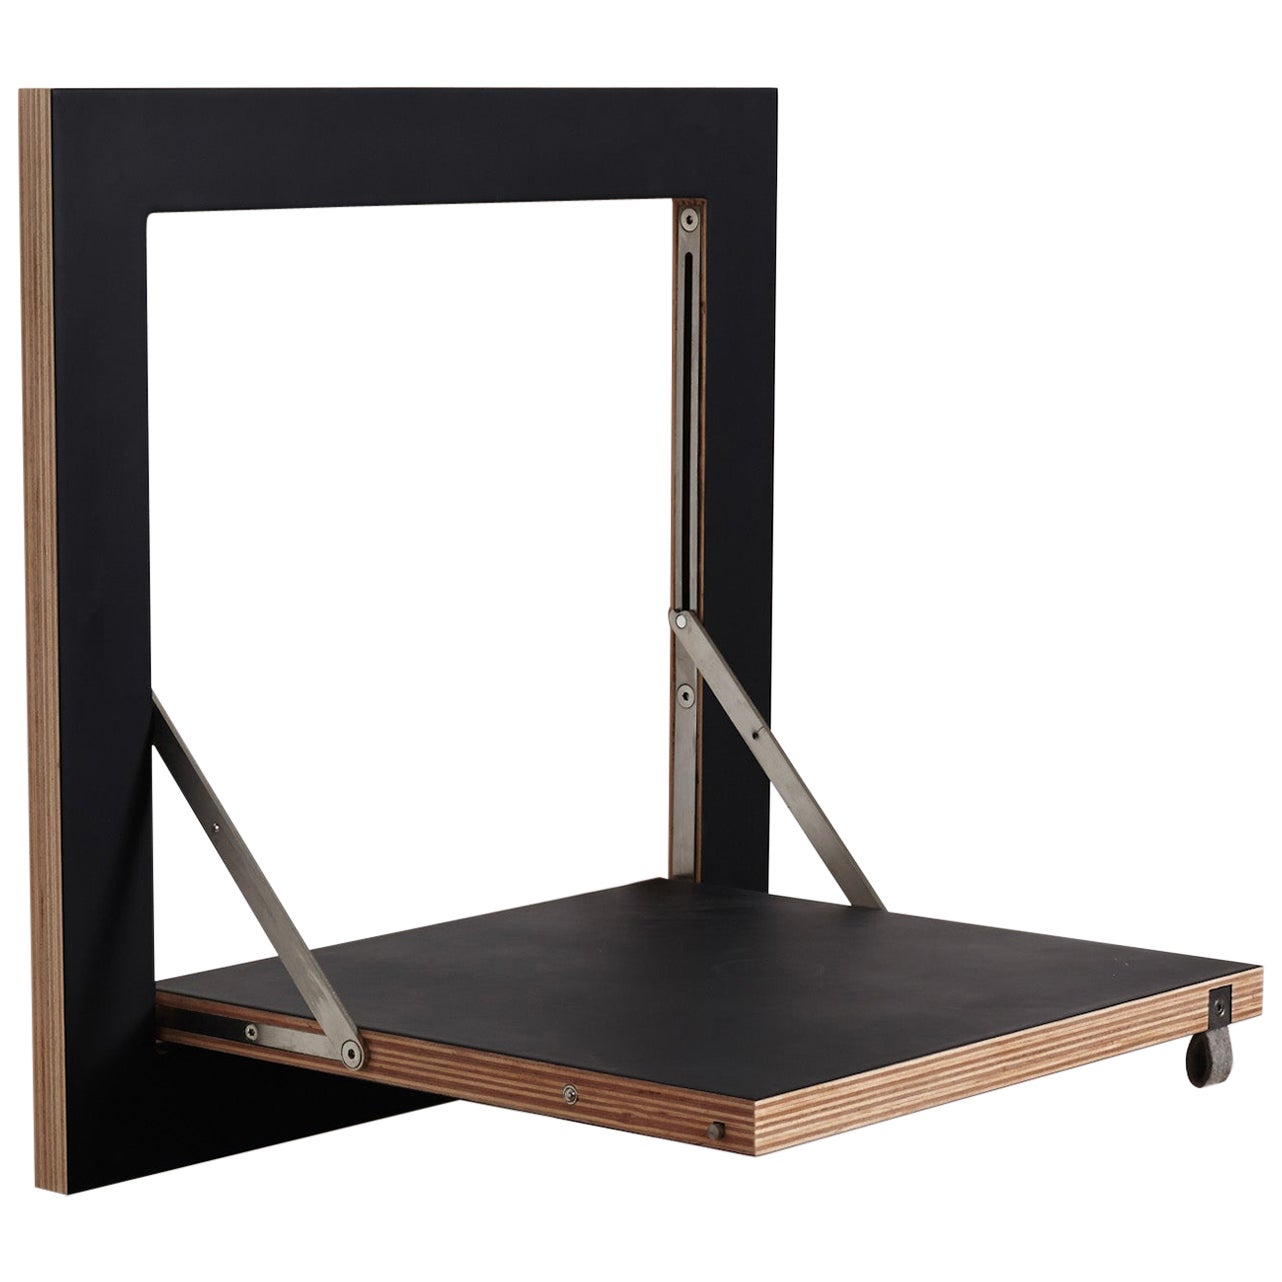 Fläpps Shelf 40x40-1 - Black For Sale